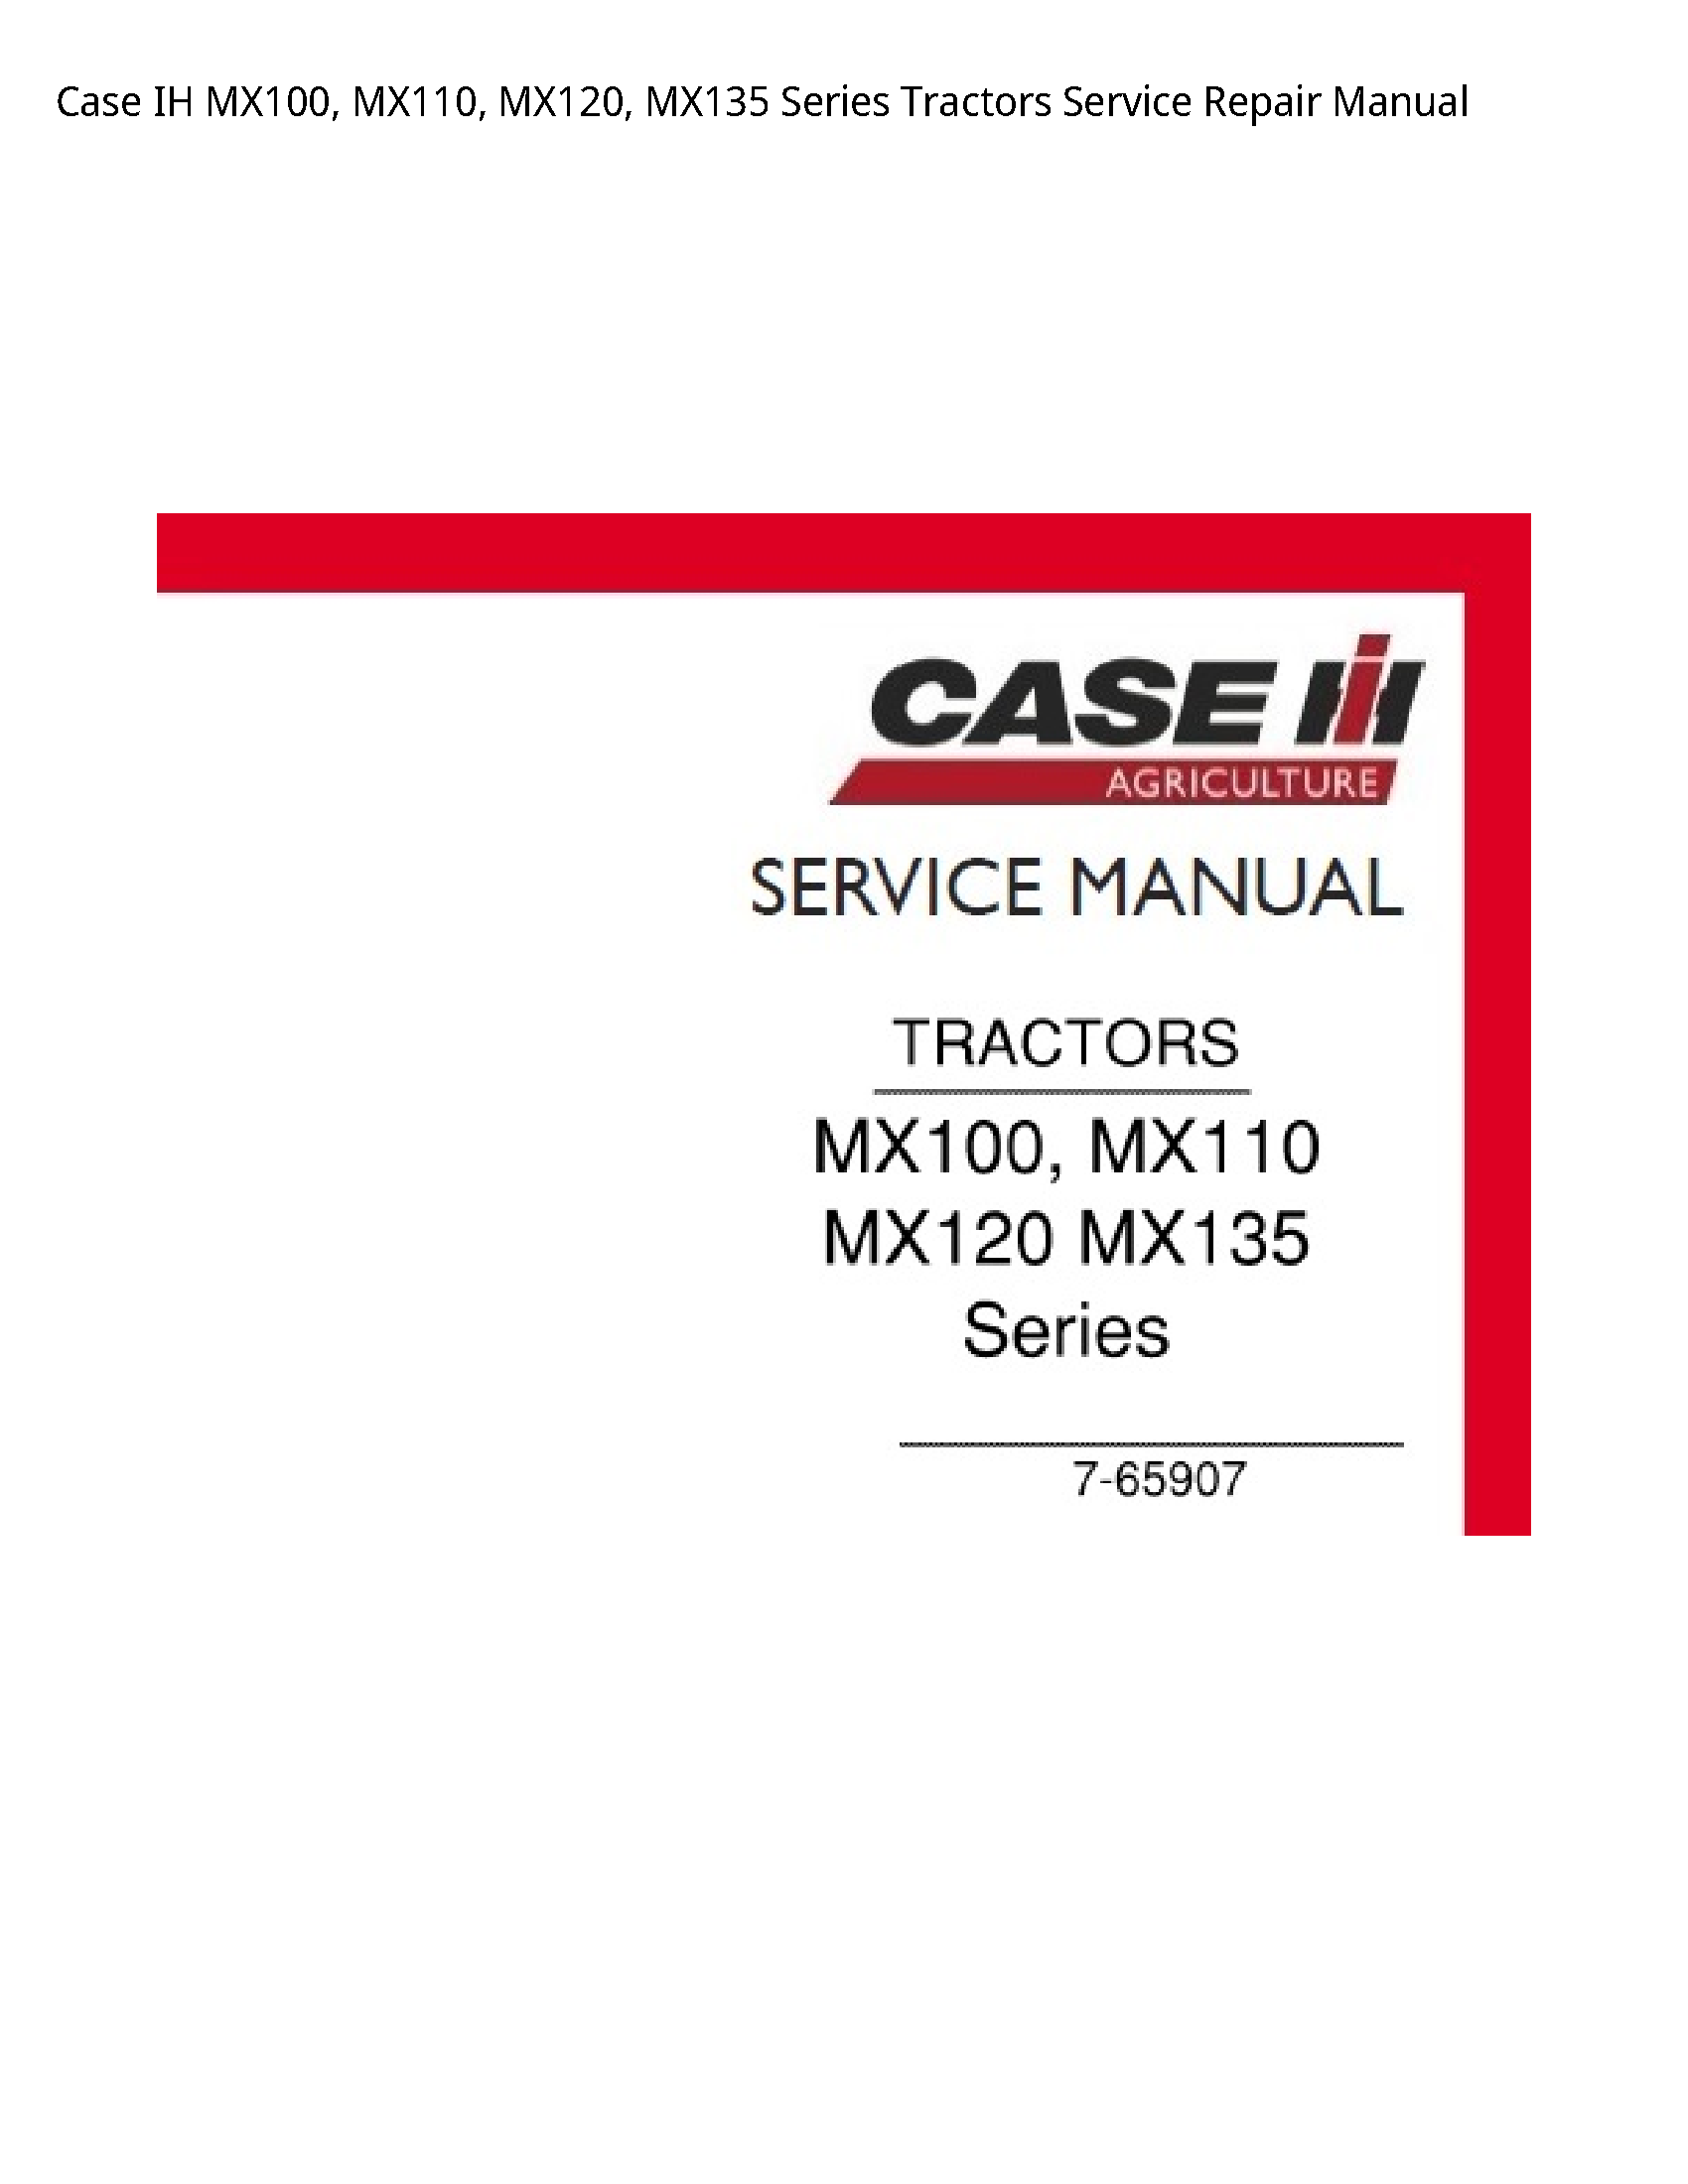 Case/Case IH MX100 IH Series Tractors manual